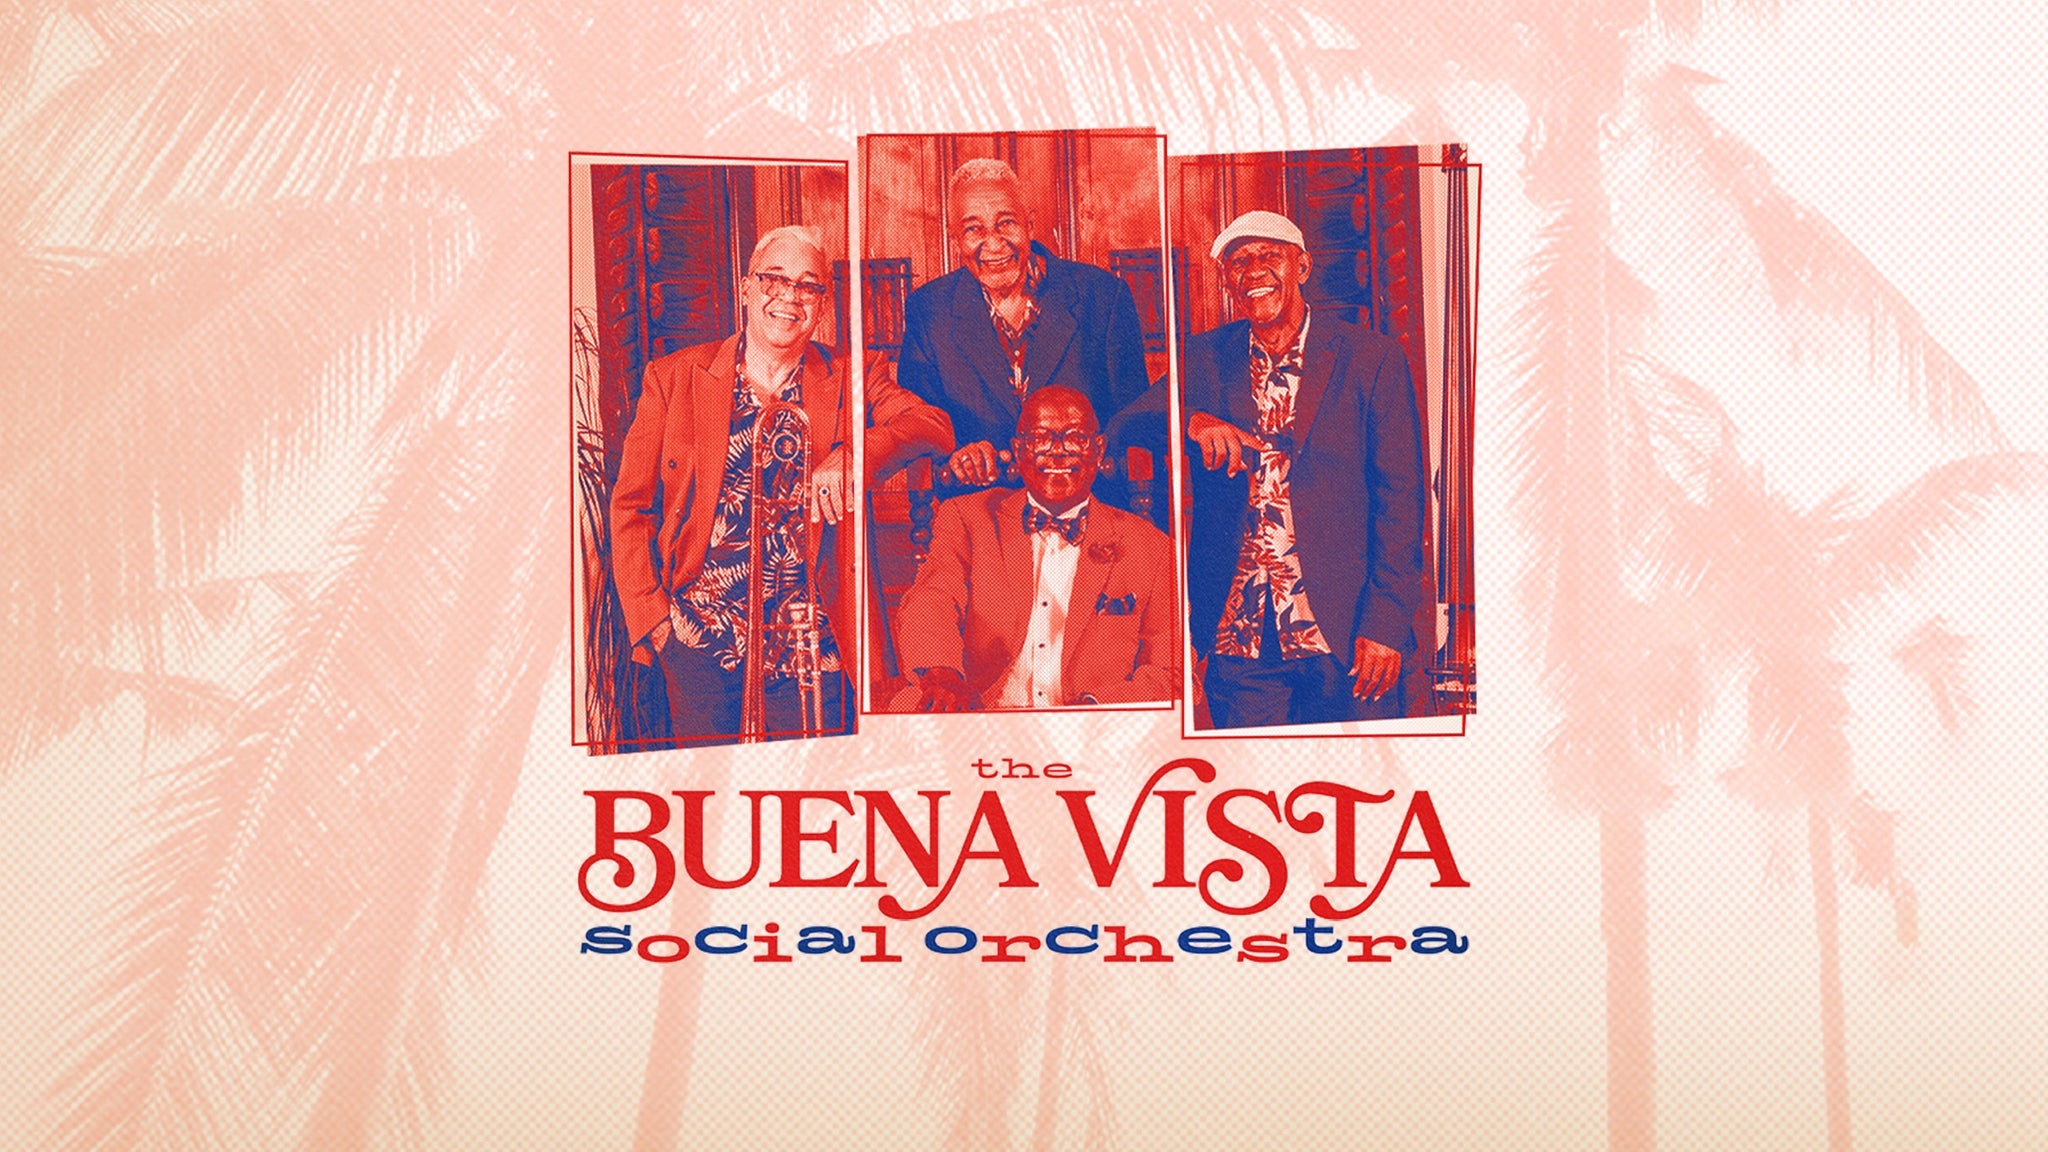 Jesus Aguaje Ramos and his Buena Vista Orchestra